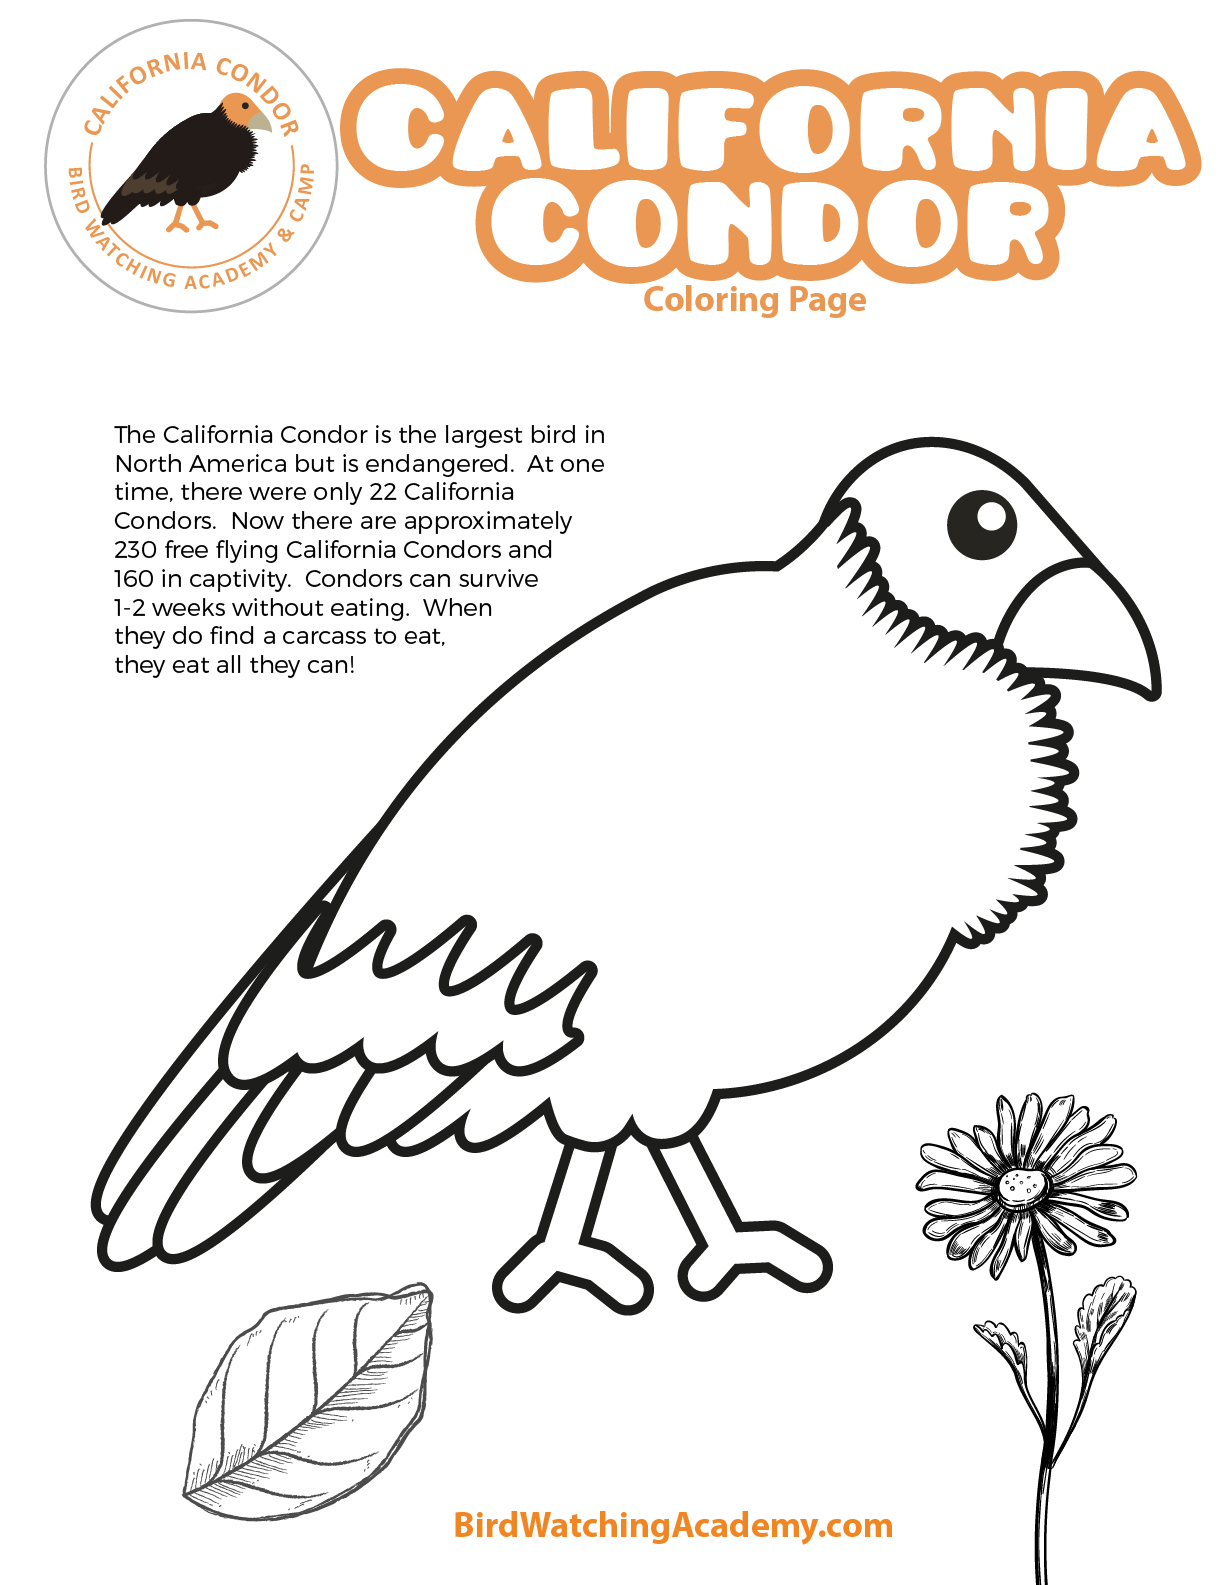 California Condor Coloring Page - Bird Watching Academy